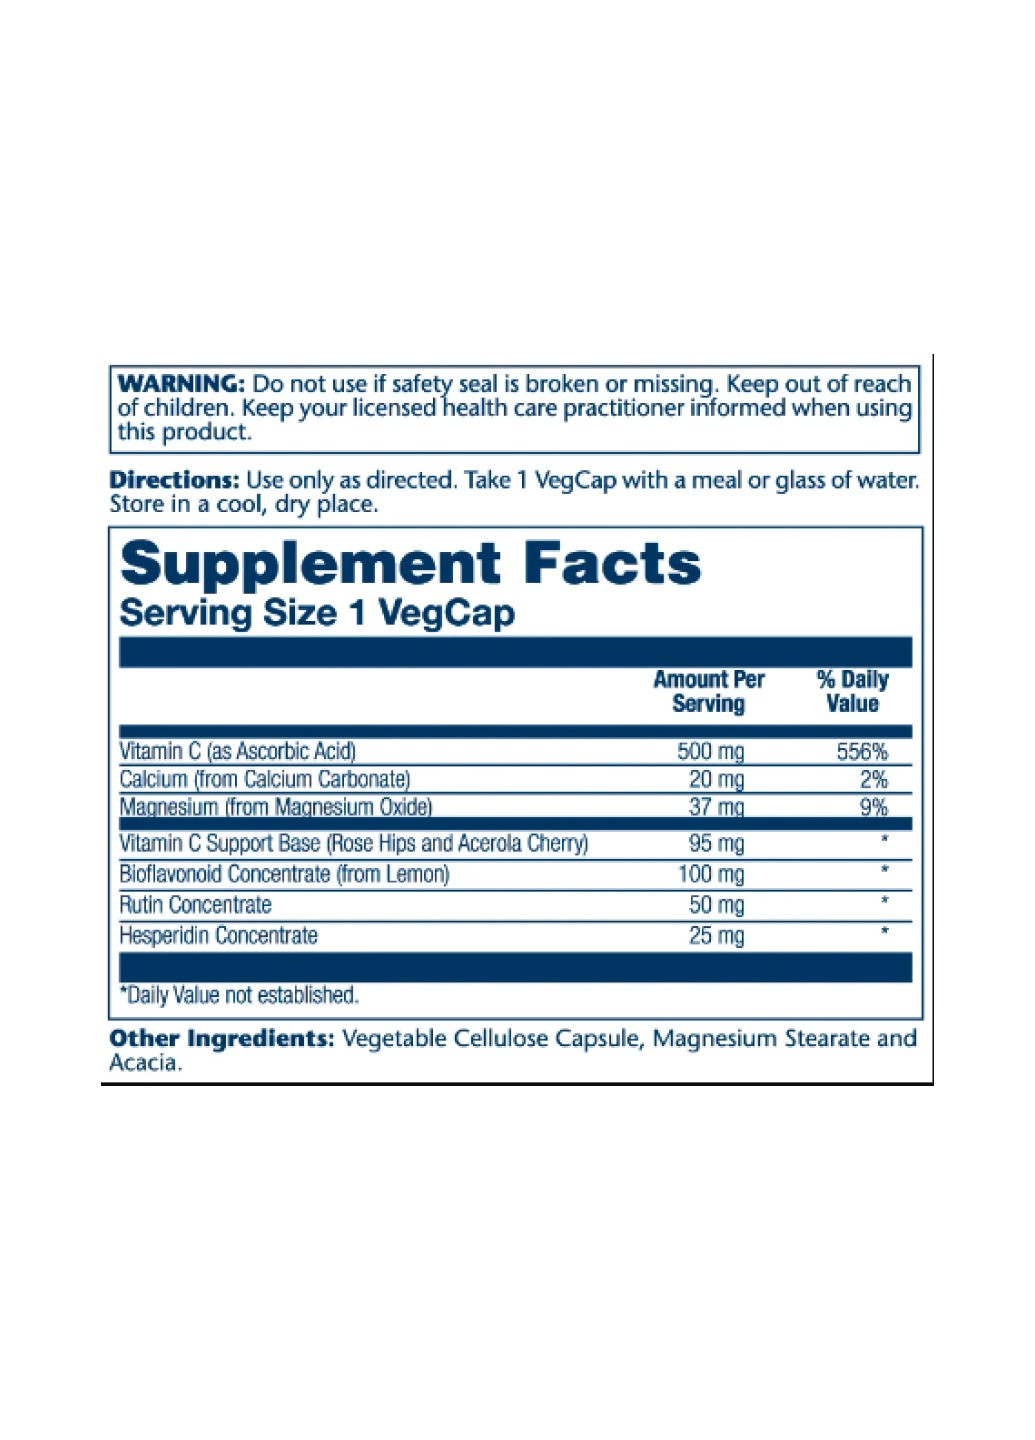 Вітамін С Vitamin C with Bioflavonoid Concentrate 500mg - 100 vcaps Solaray (273183027)